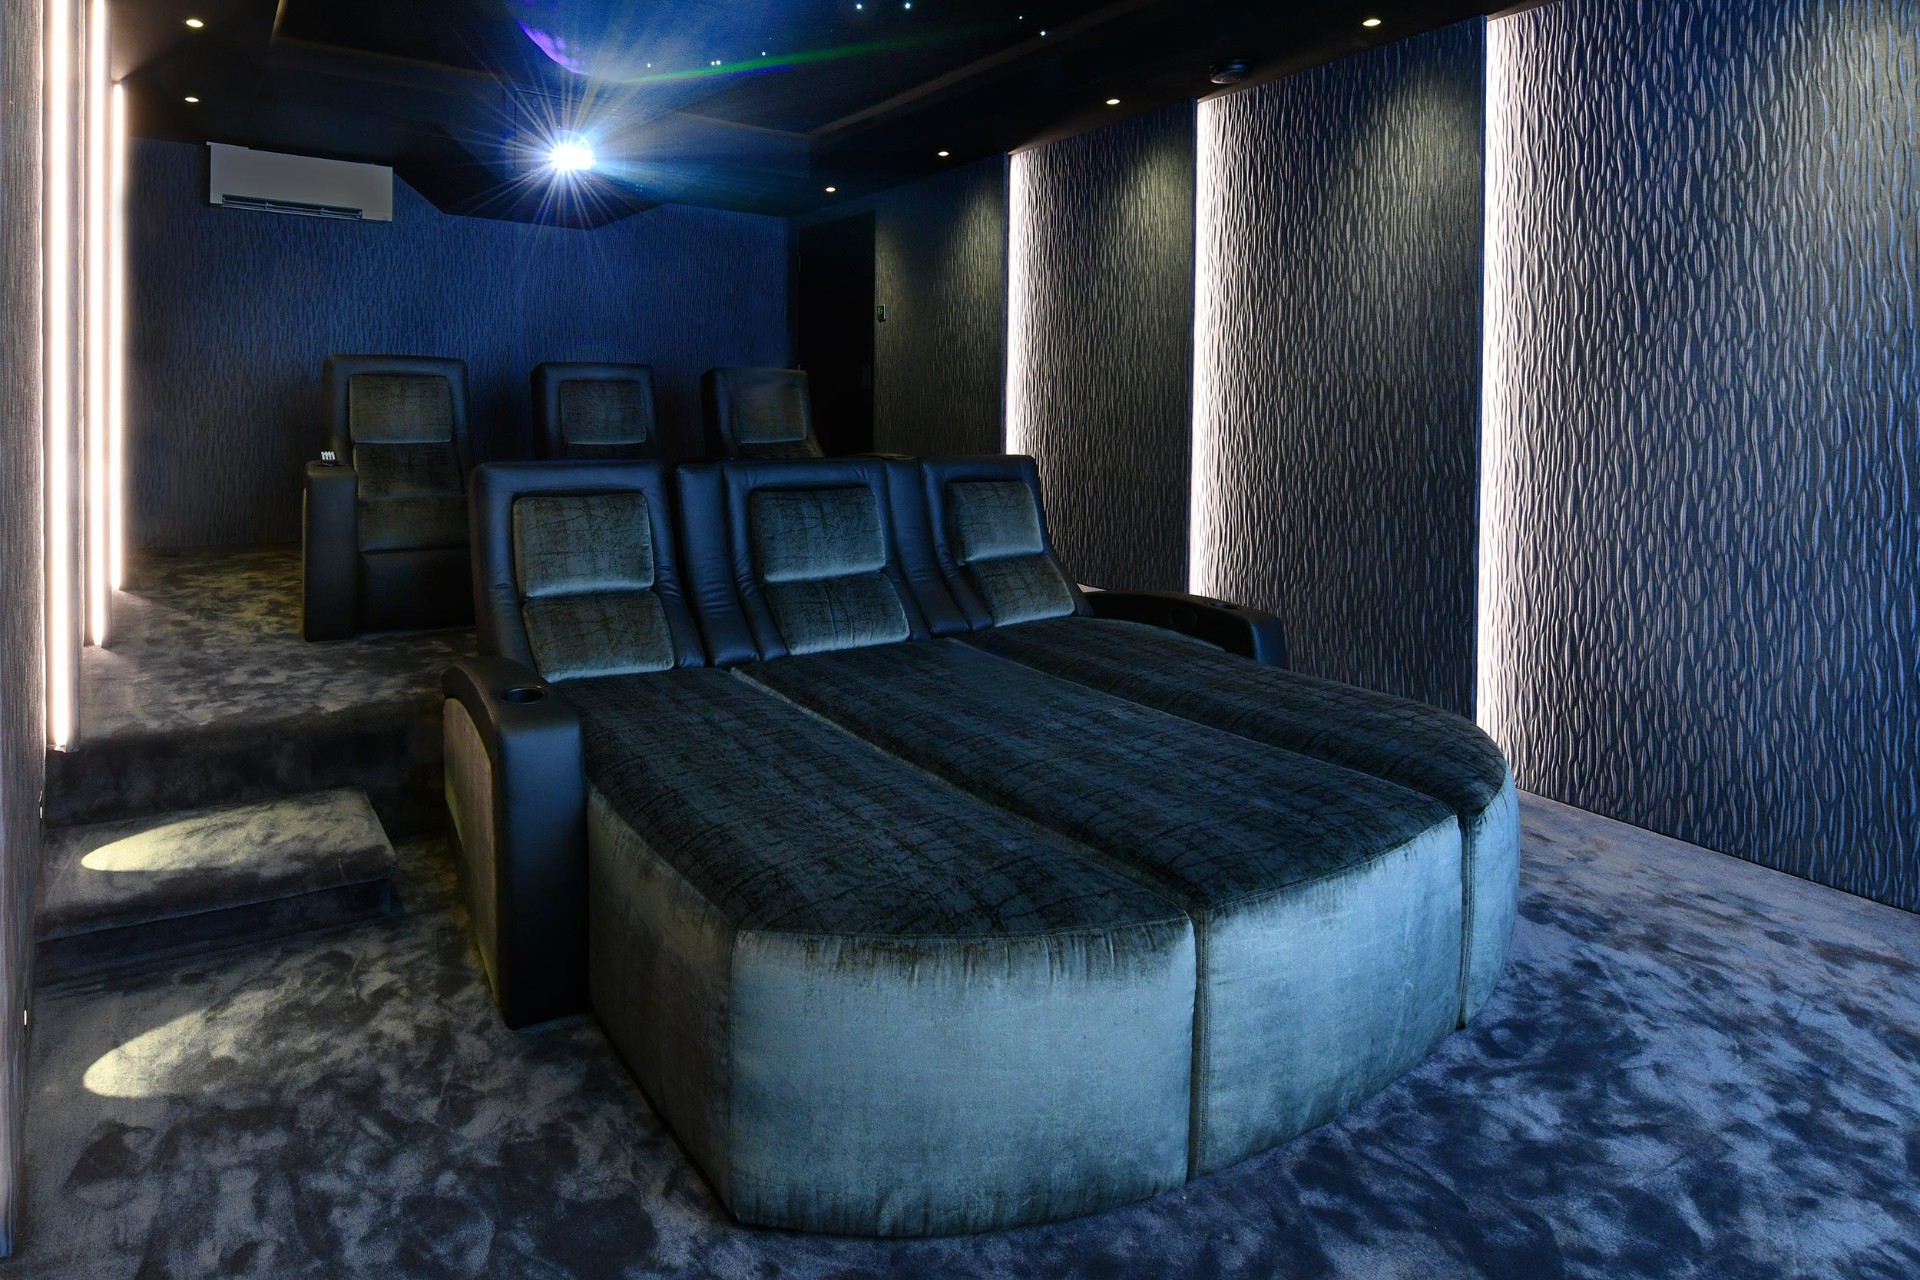 How can IMAX Enhanced make home cinema better? Image